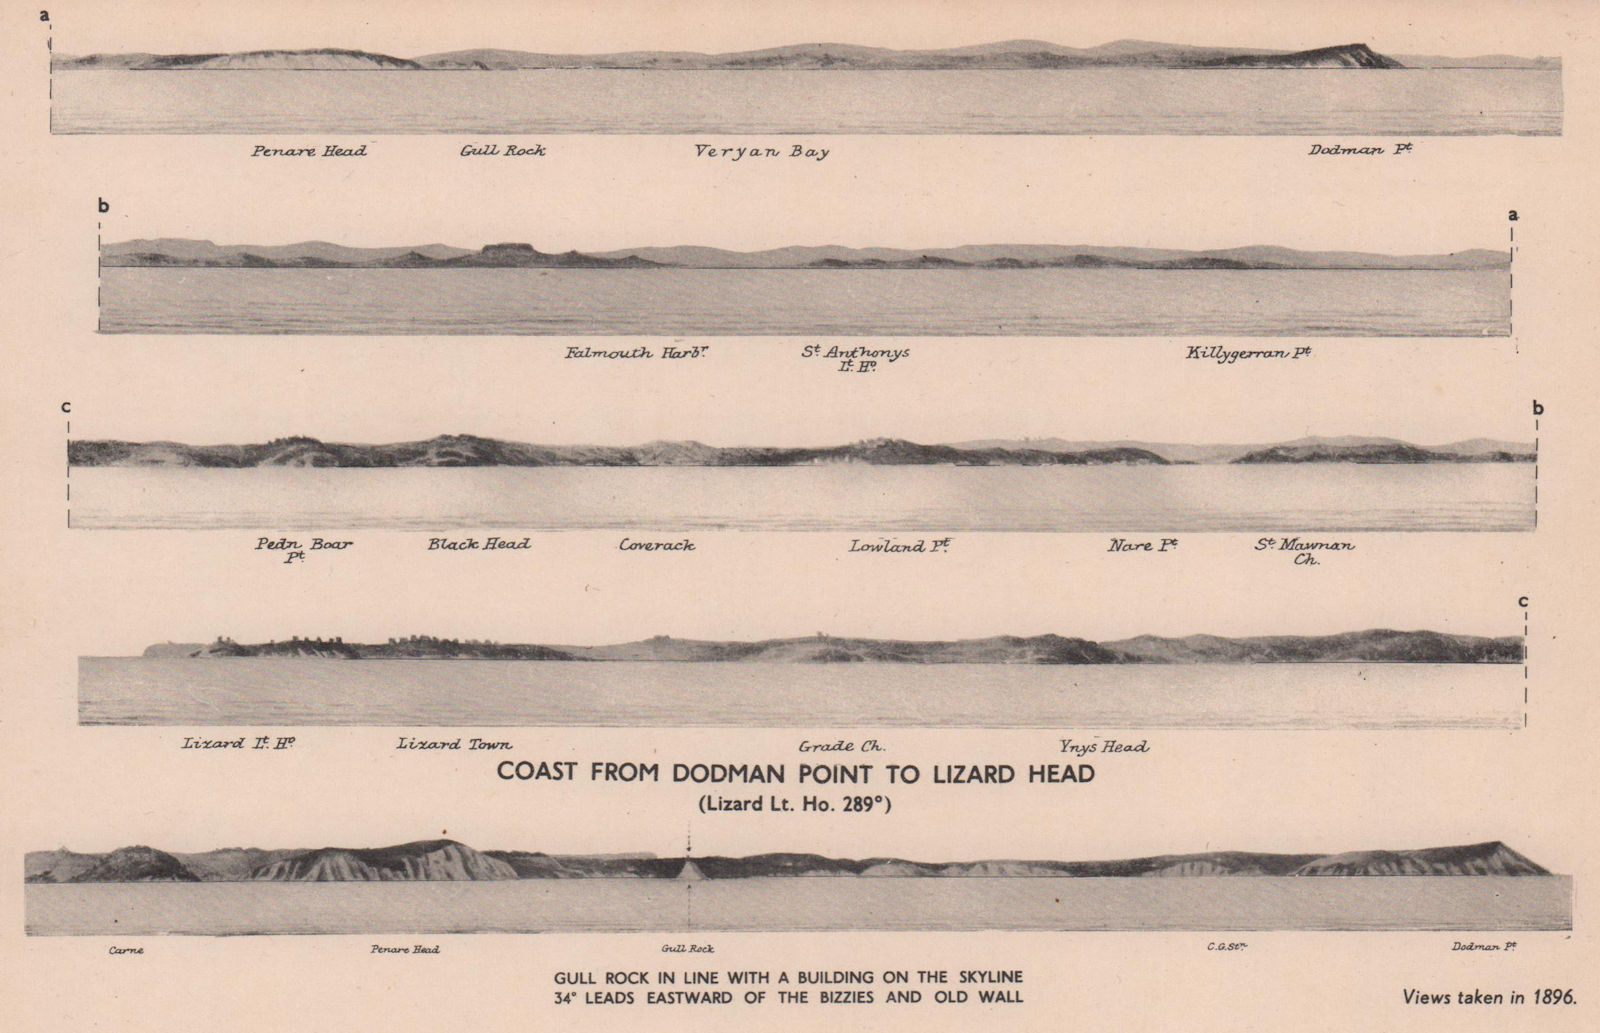 Dodman Point to Lizard Head. Falmouth. Cornwall coast profile. ADMIRALTY 1943